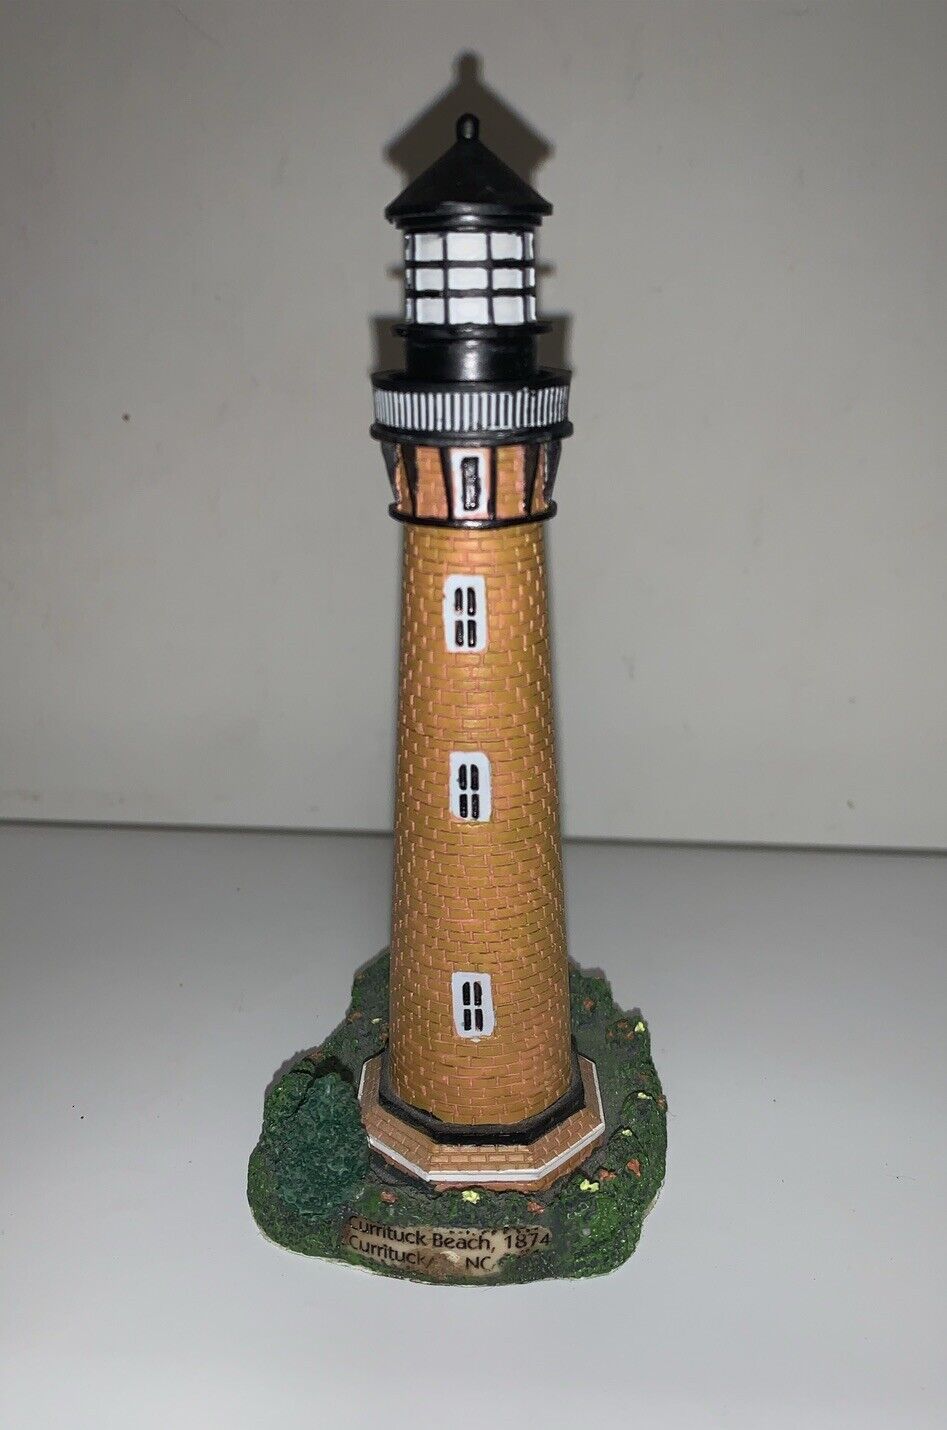 1998 Lefton Currituck Beach NC 1874 Historic American Lighthouse 6”